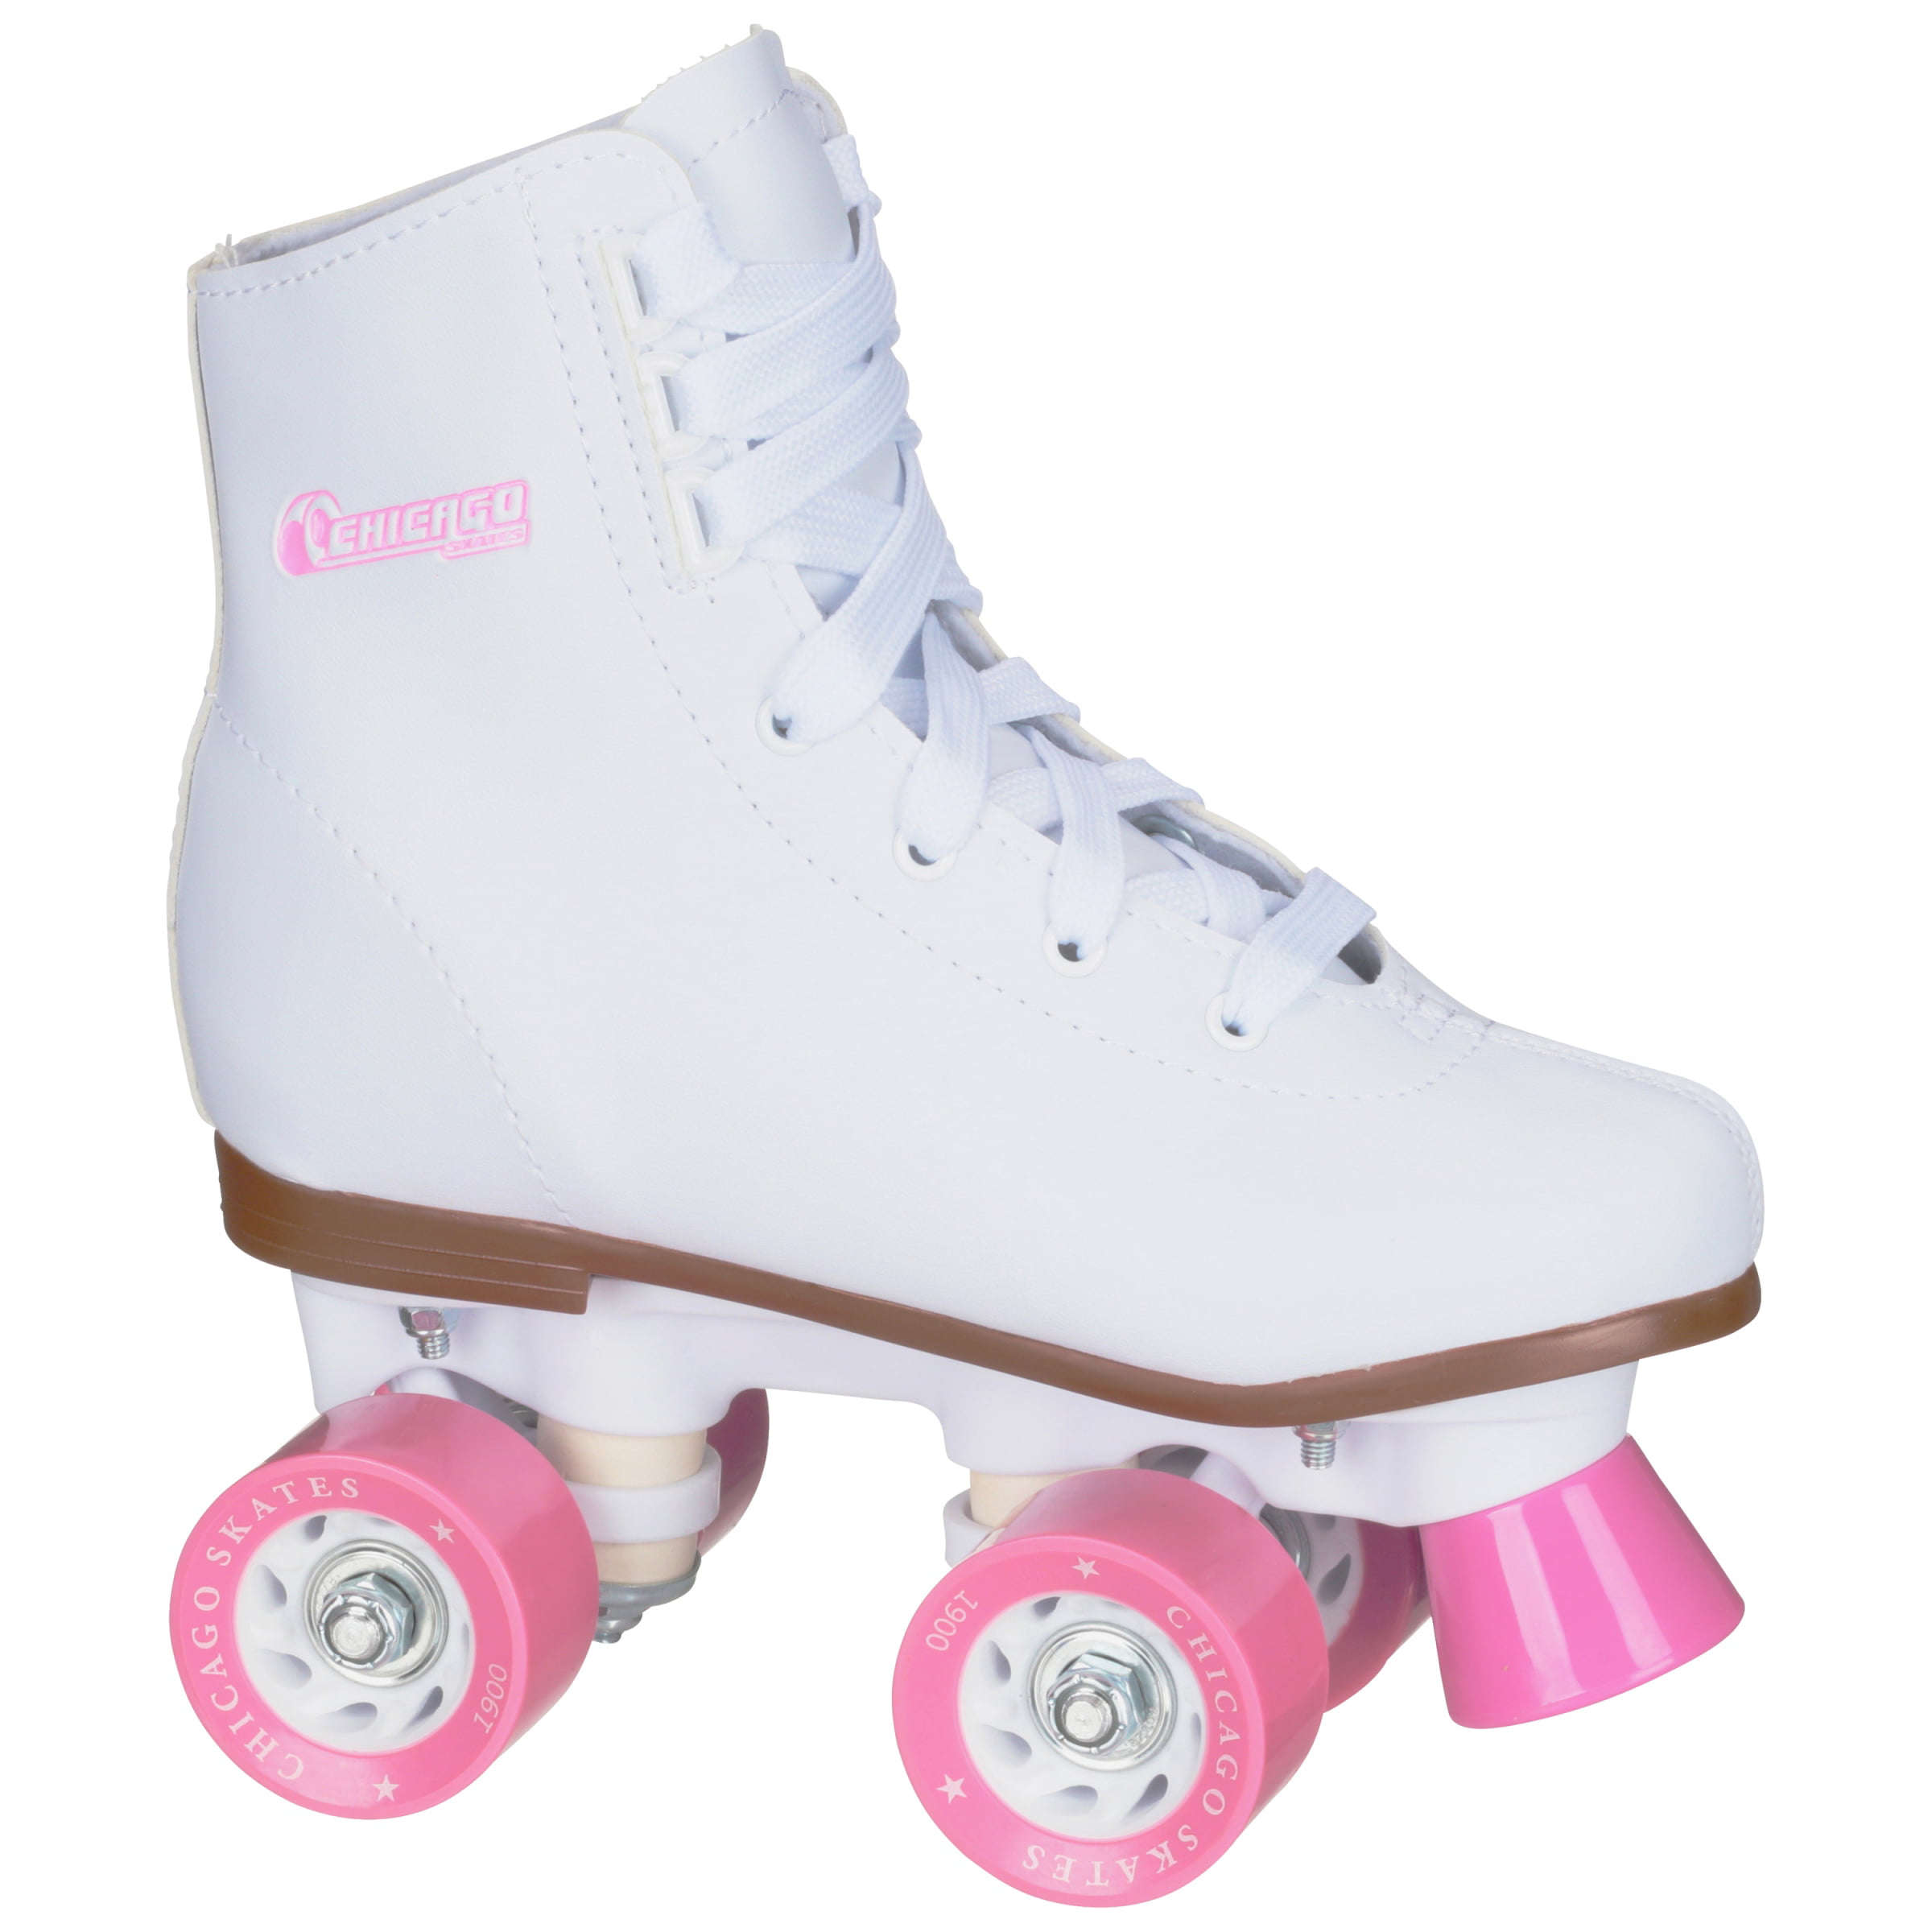 Chicago Women's Classic Roller Skates Premium White Quad Rink Skates Size 9 